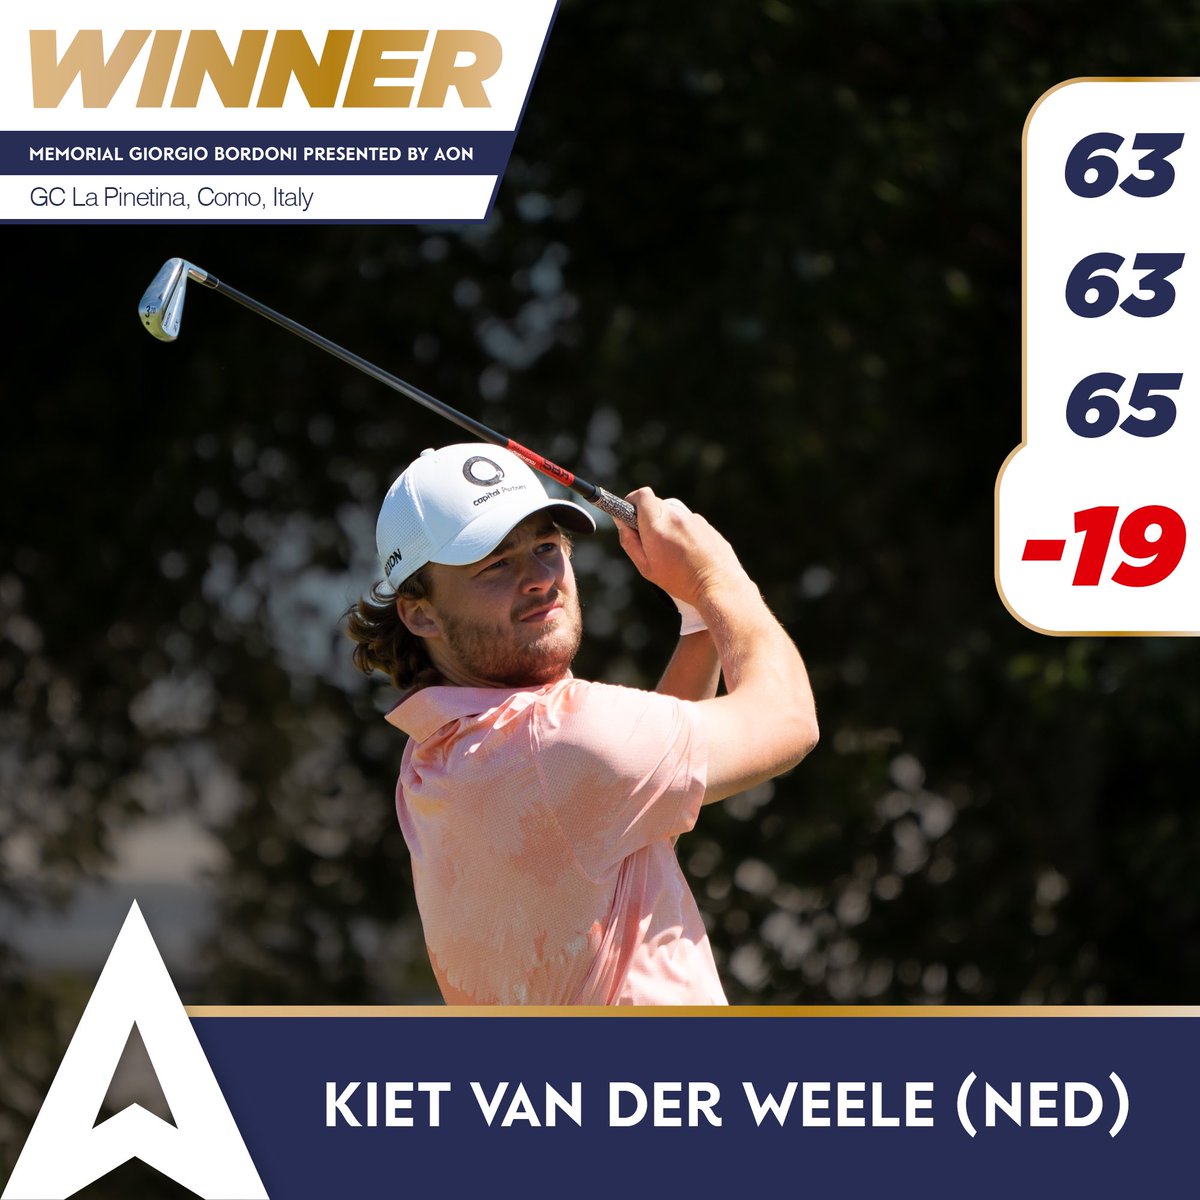 🇳🇱Kiet Van der Weele wins the 2023 Memorial Giorgio Bordoni presented by Aon by 9 strokes!⛳️ 

📸- Alps Tour Golf/ Federico Capretti  

#2023AlpsTourSeason
#raisinggolfstars 
#risinggolfstars